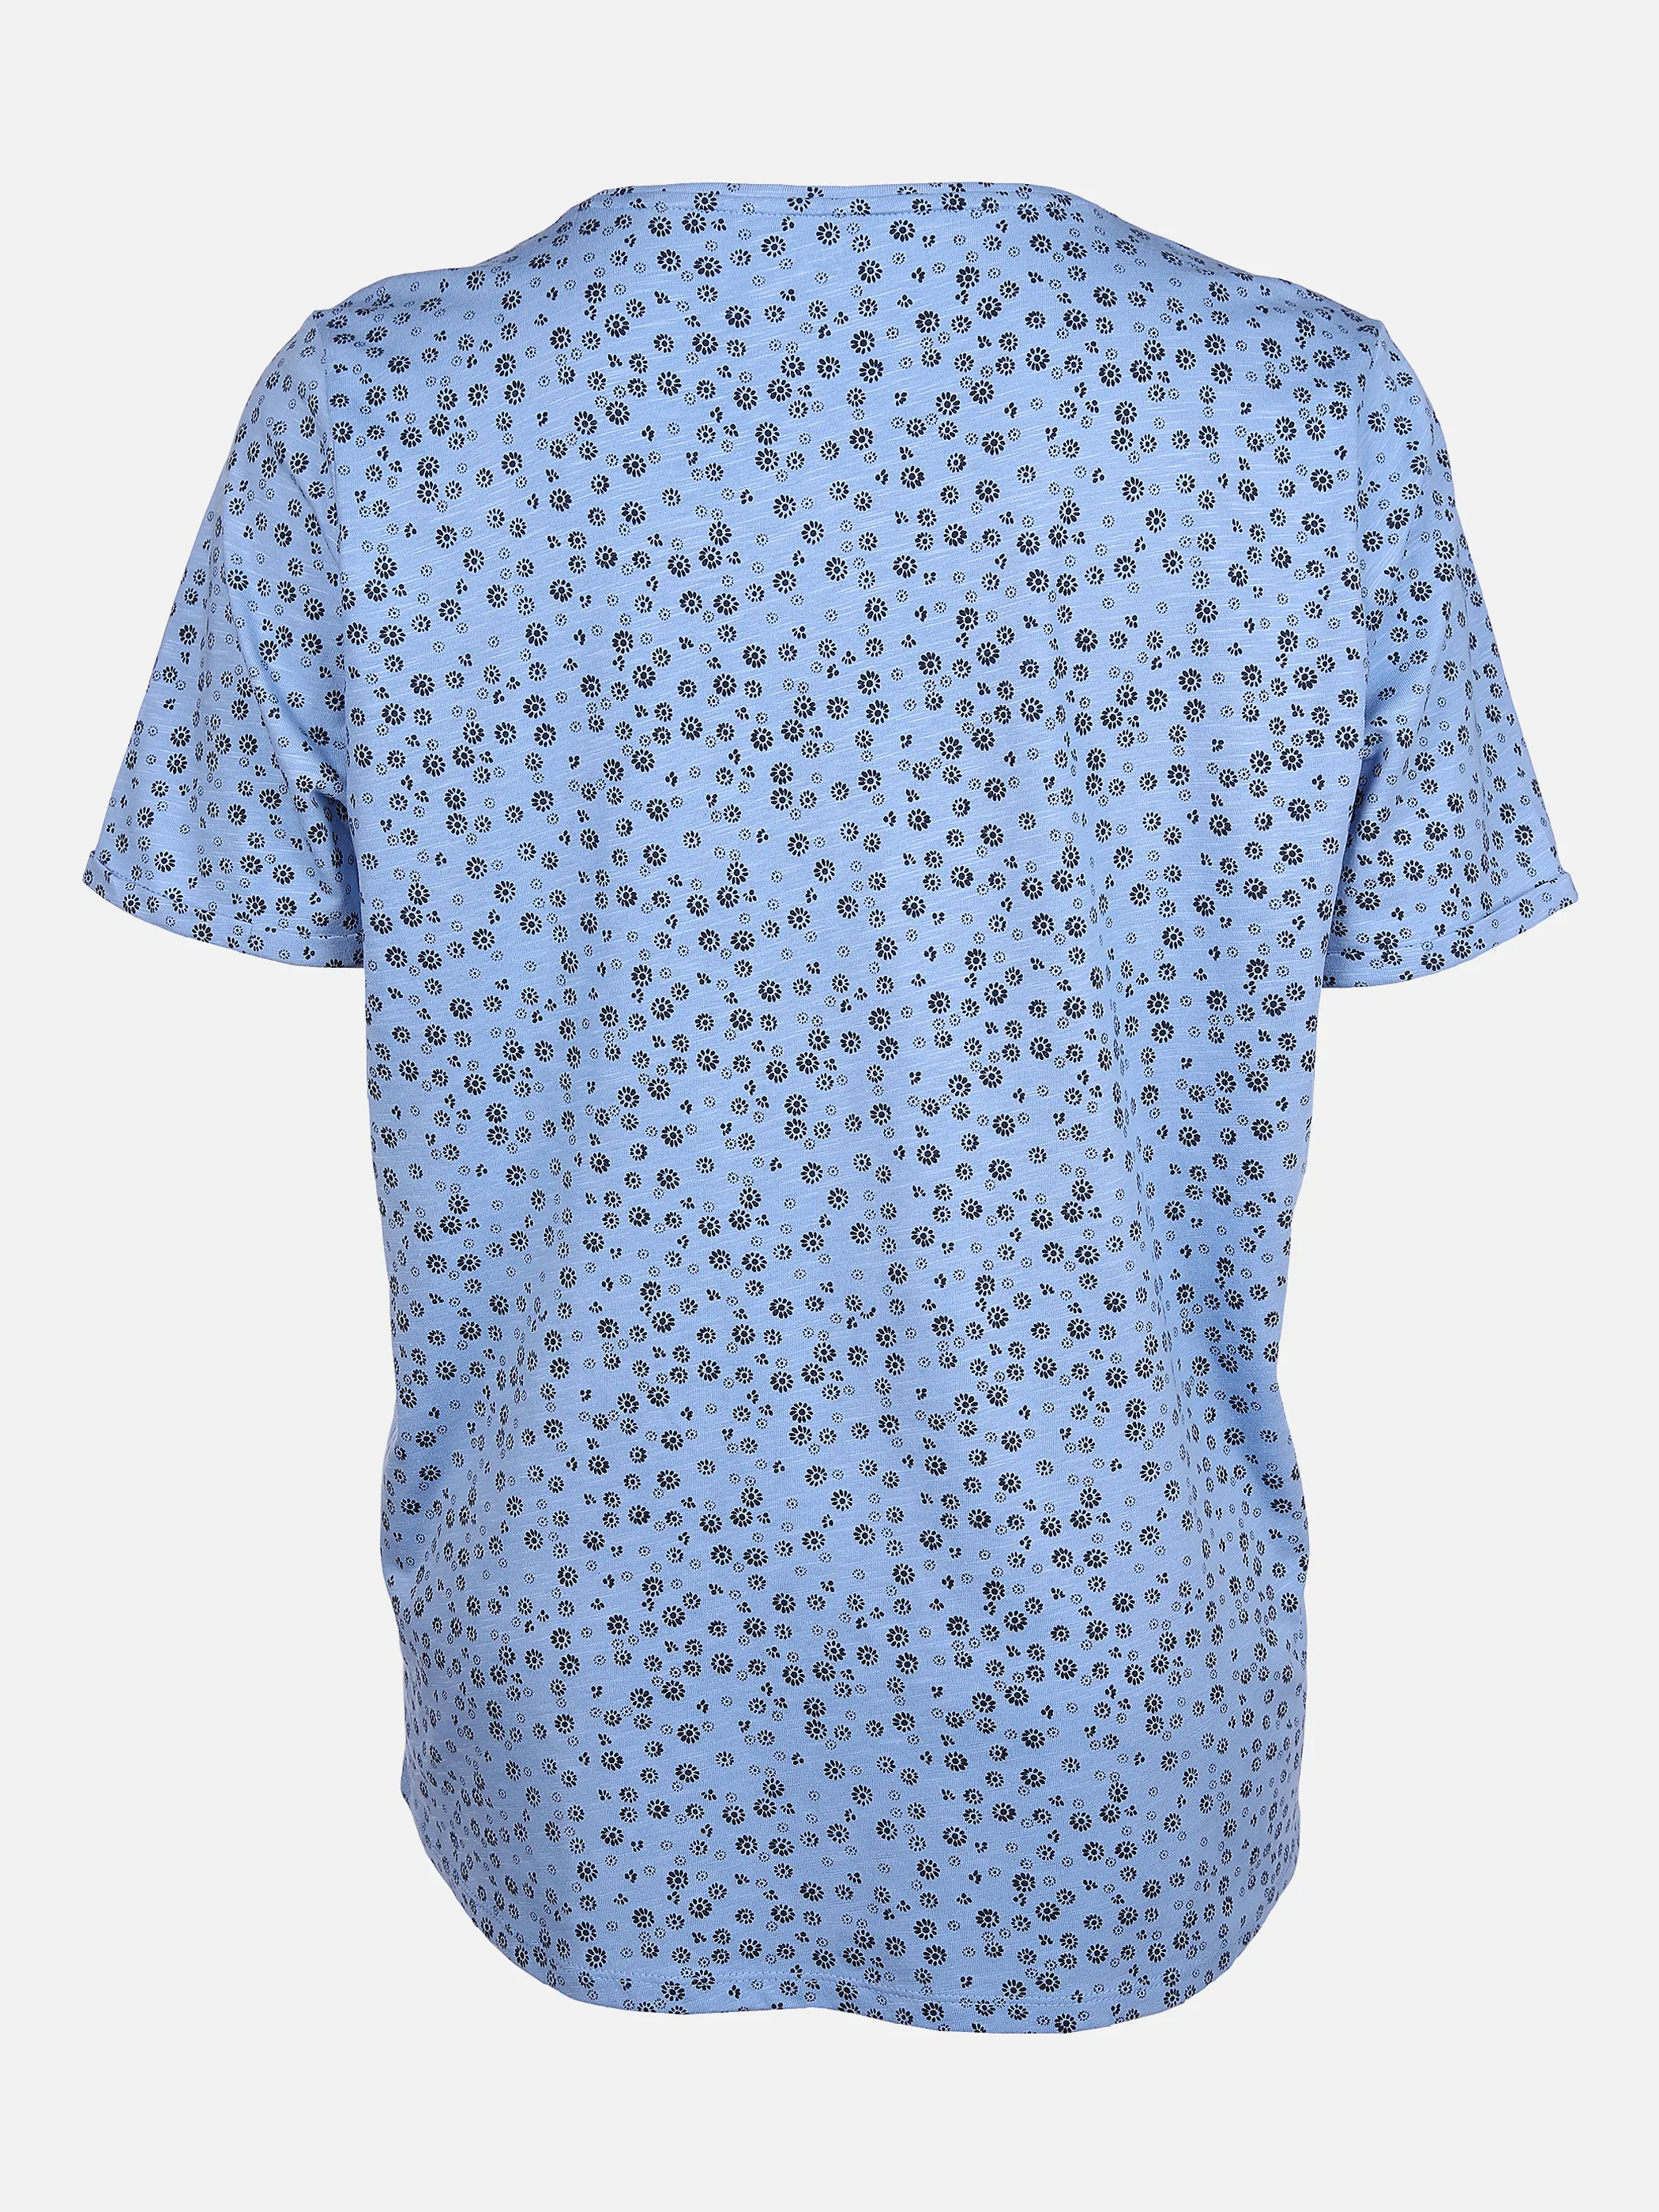 Sonja Blank Da-Gr.Größen Shirt m. Print Blau 862269 SUMMER SEA 2